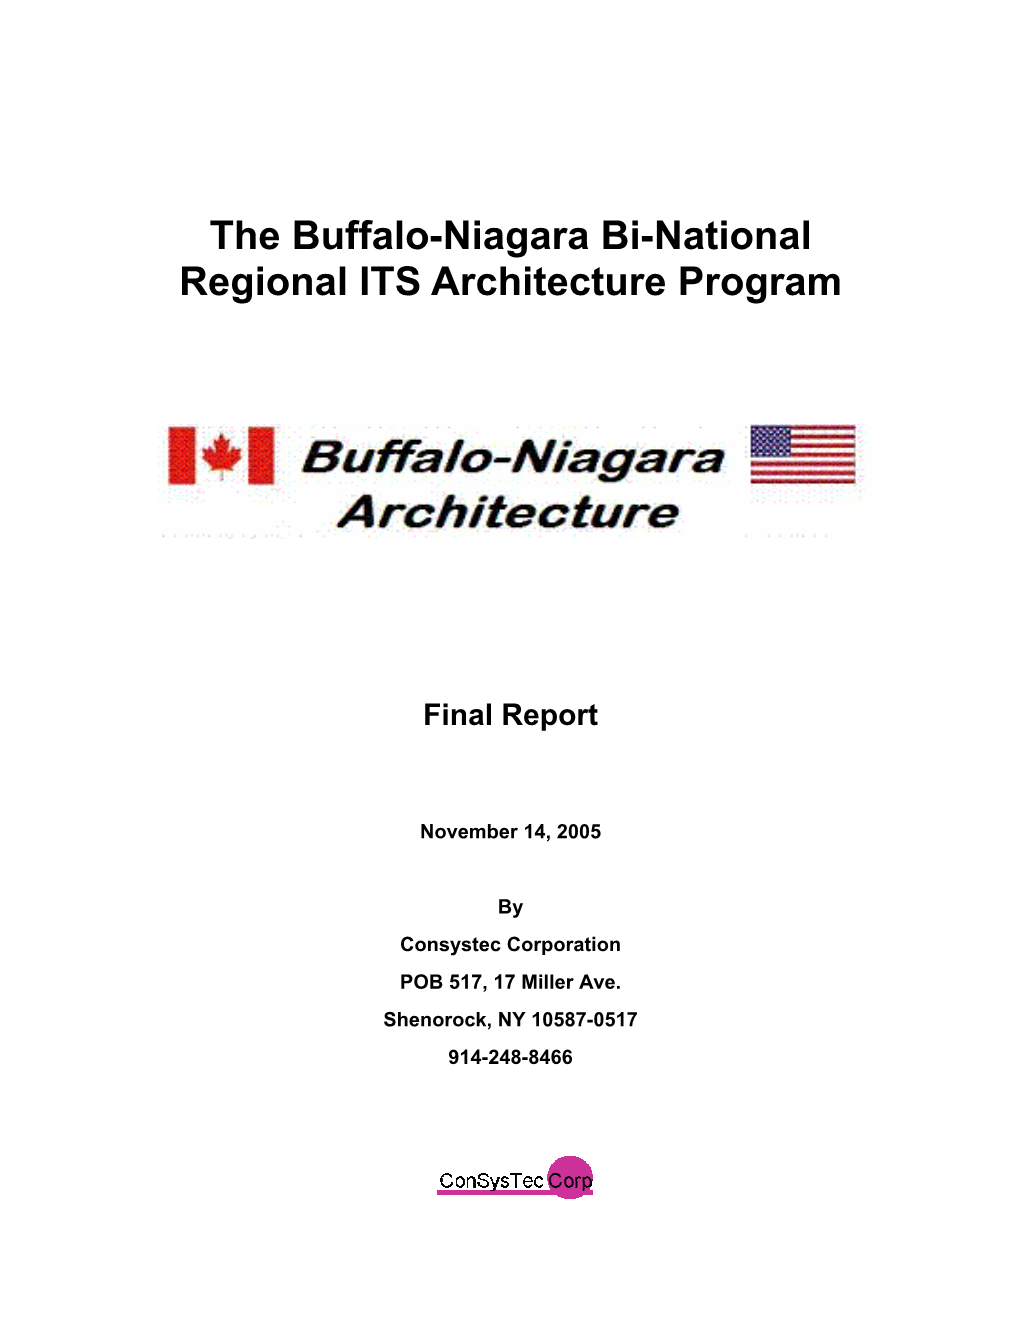 The Buffalo-Niagara Bi-National Regional ITS Architecture Program